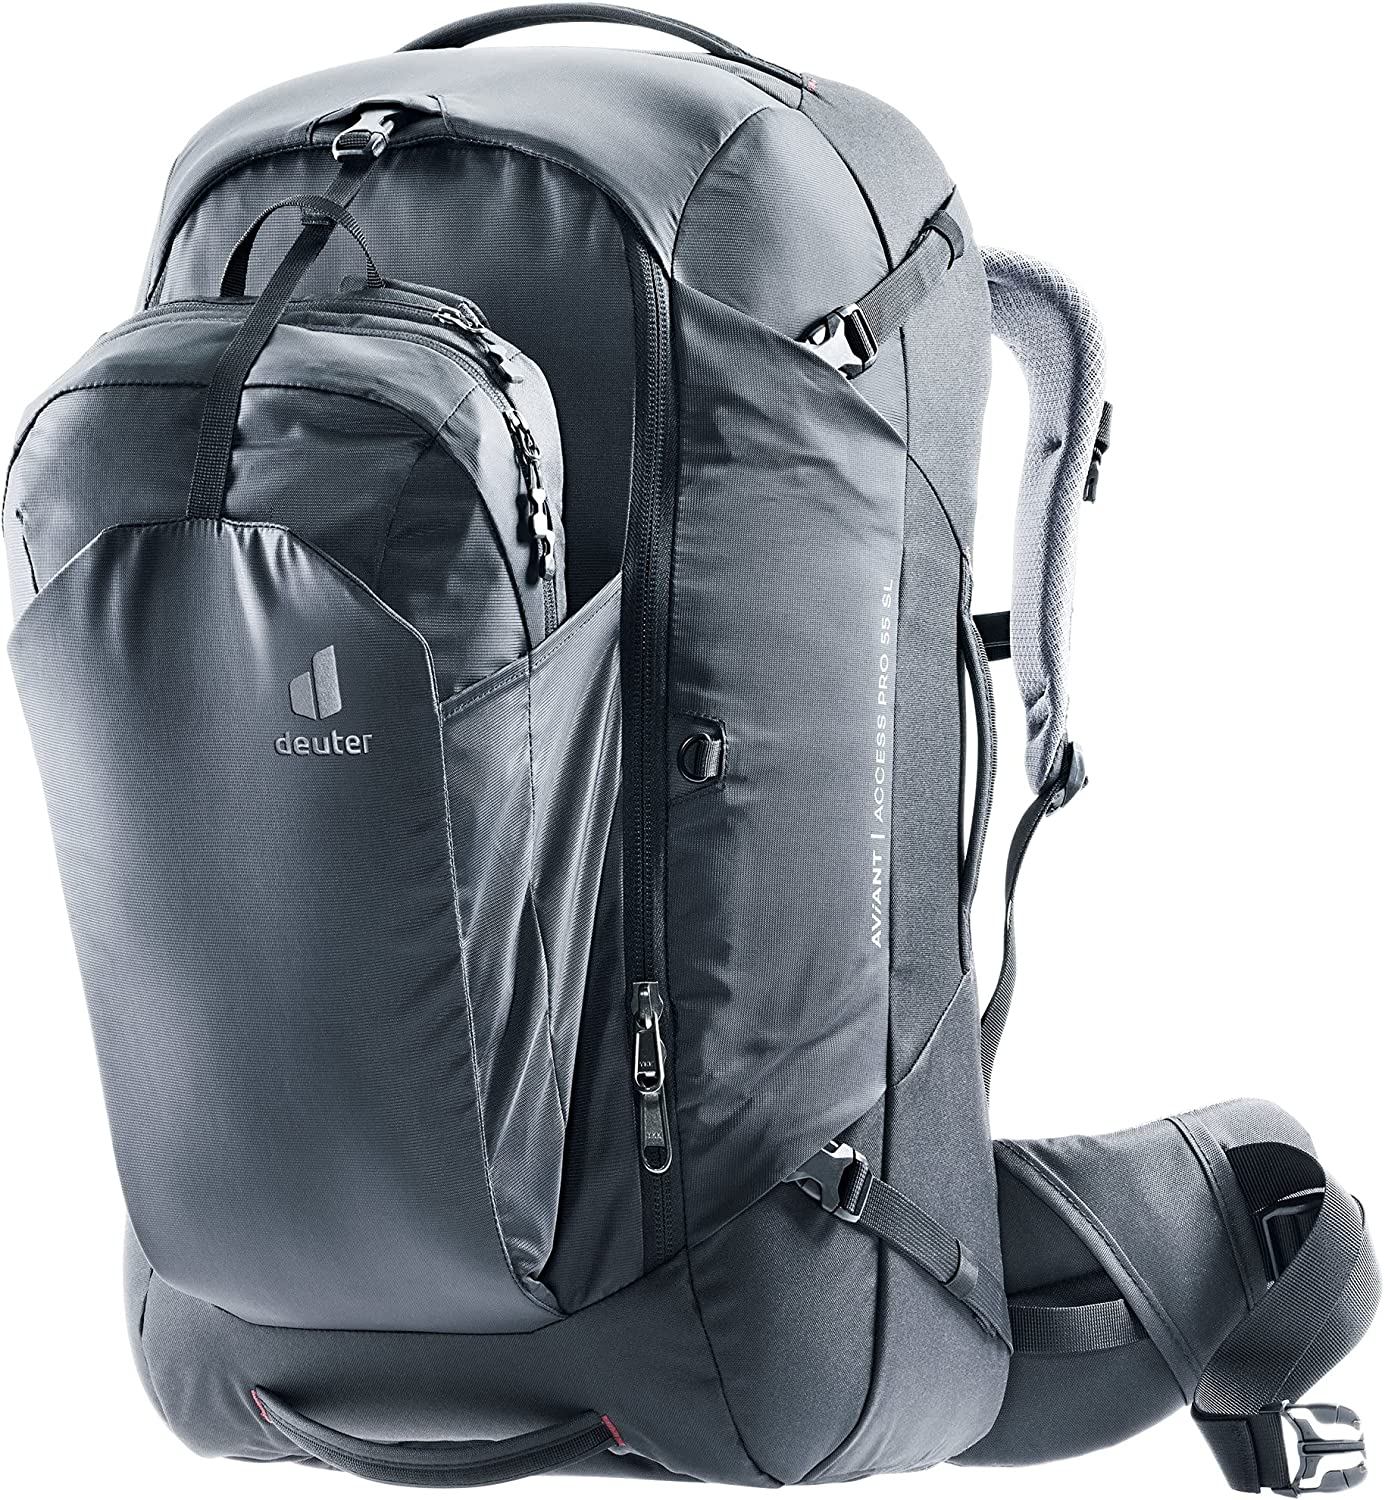 Deuter Women's Aviant Access Pro 55 Sl Travel backpack